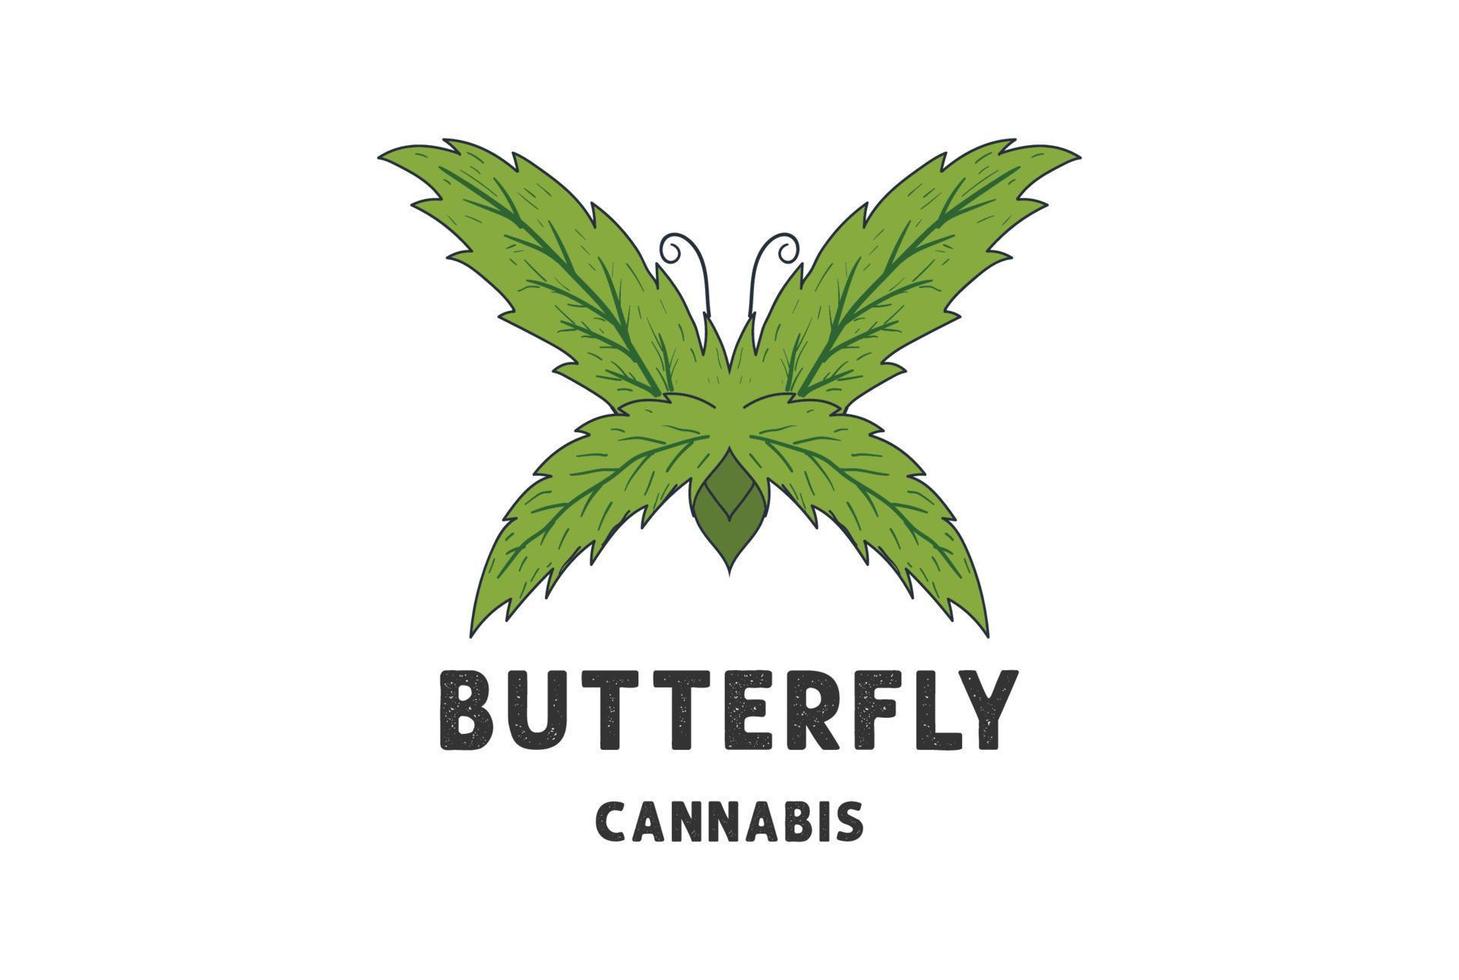 grünes frisches Schmetterlings-Cannabis-Marihuana-Ganja-Blatt für Naturhanf-CBD-Ölextrakt-Logo vektor